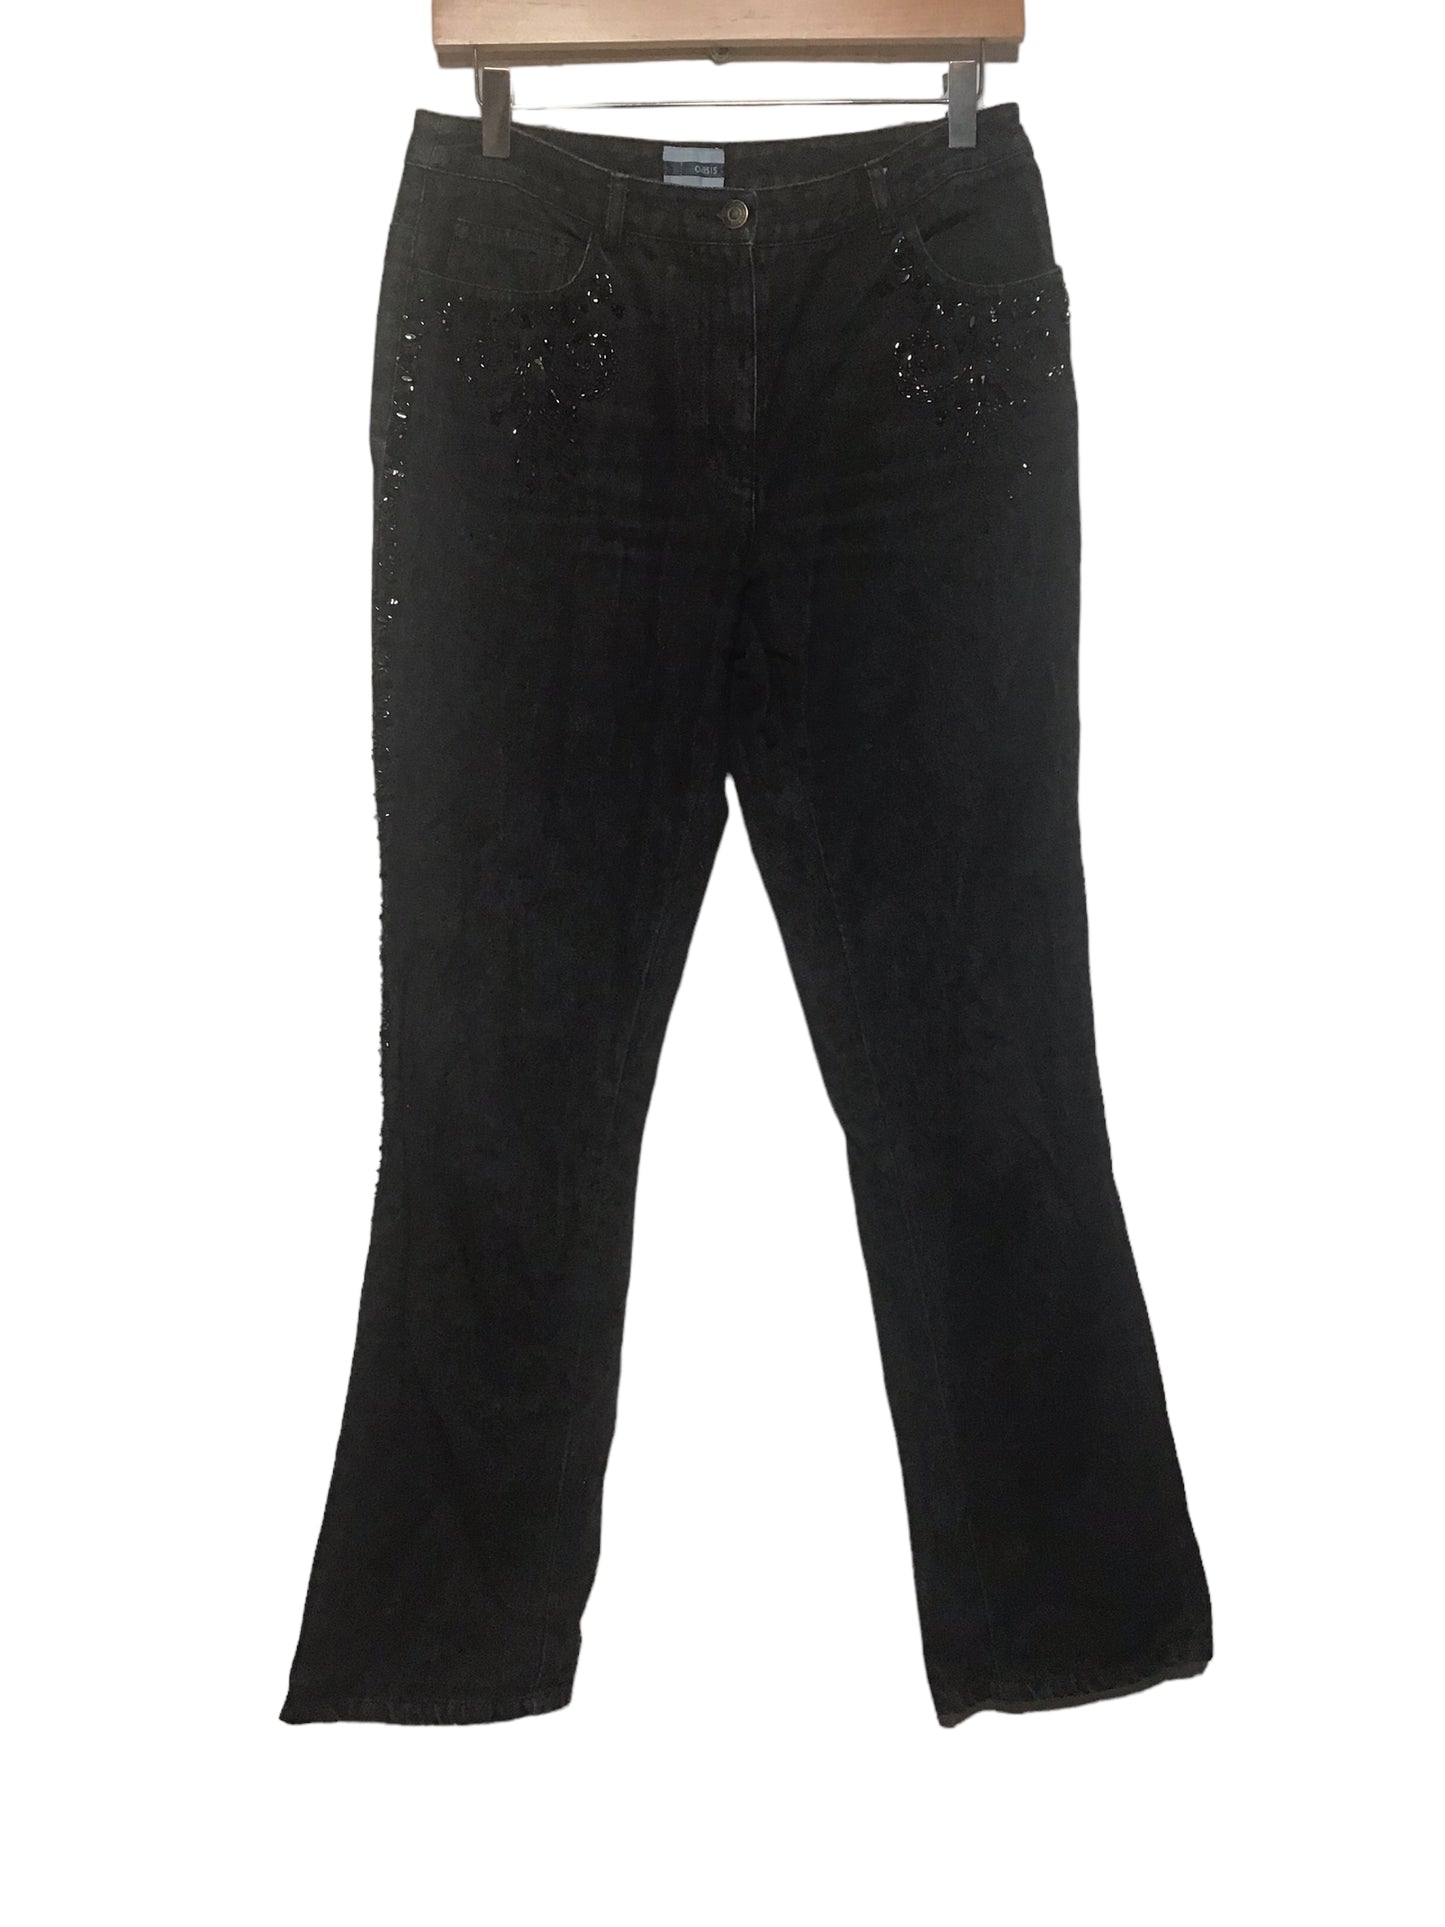 Oasis Black Denim Jeans (30x31)